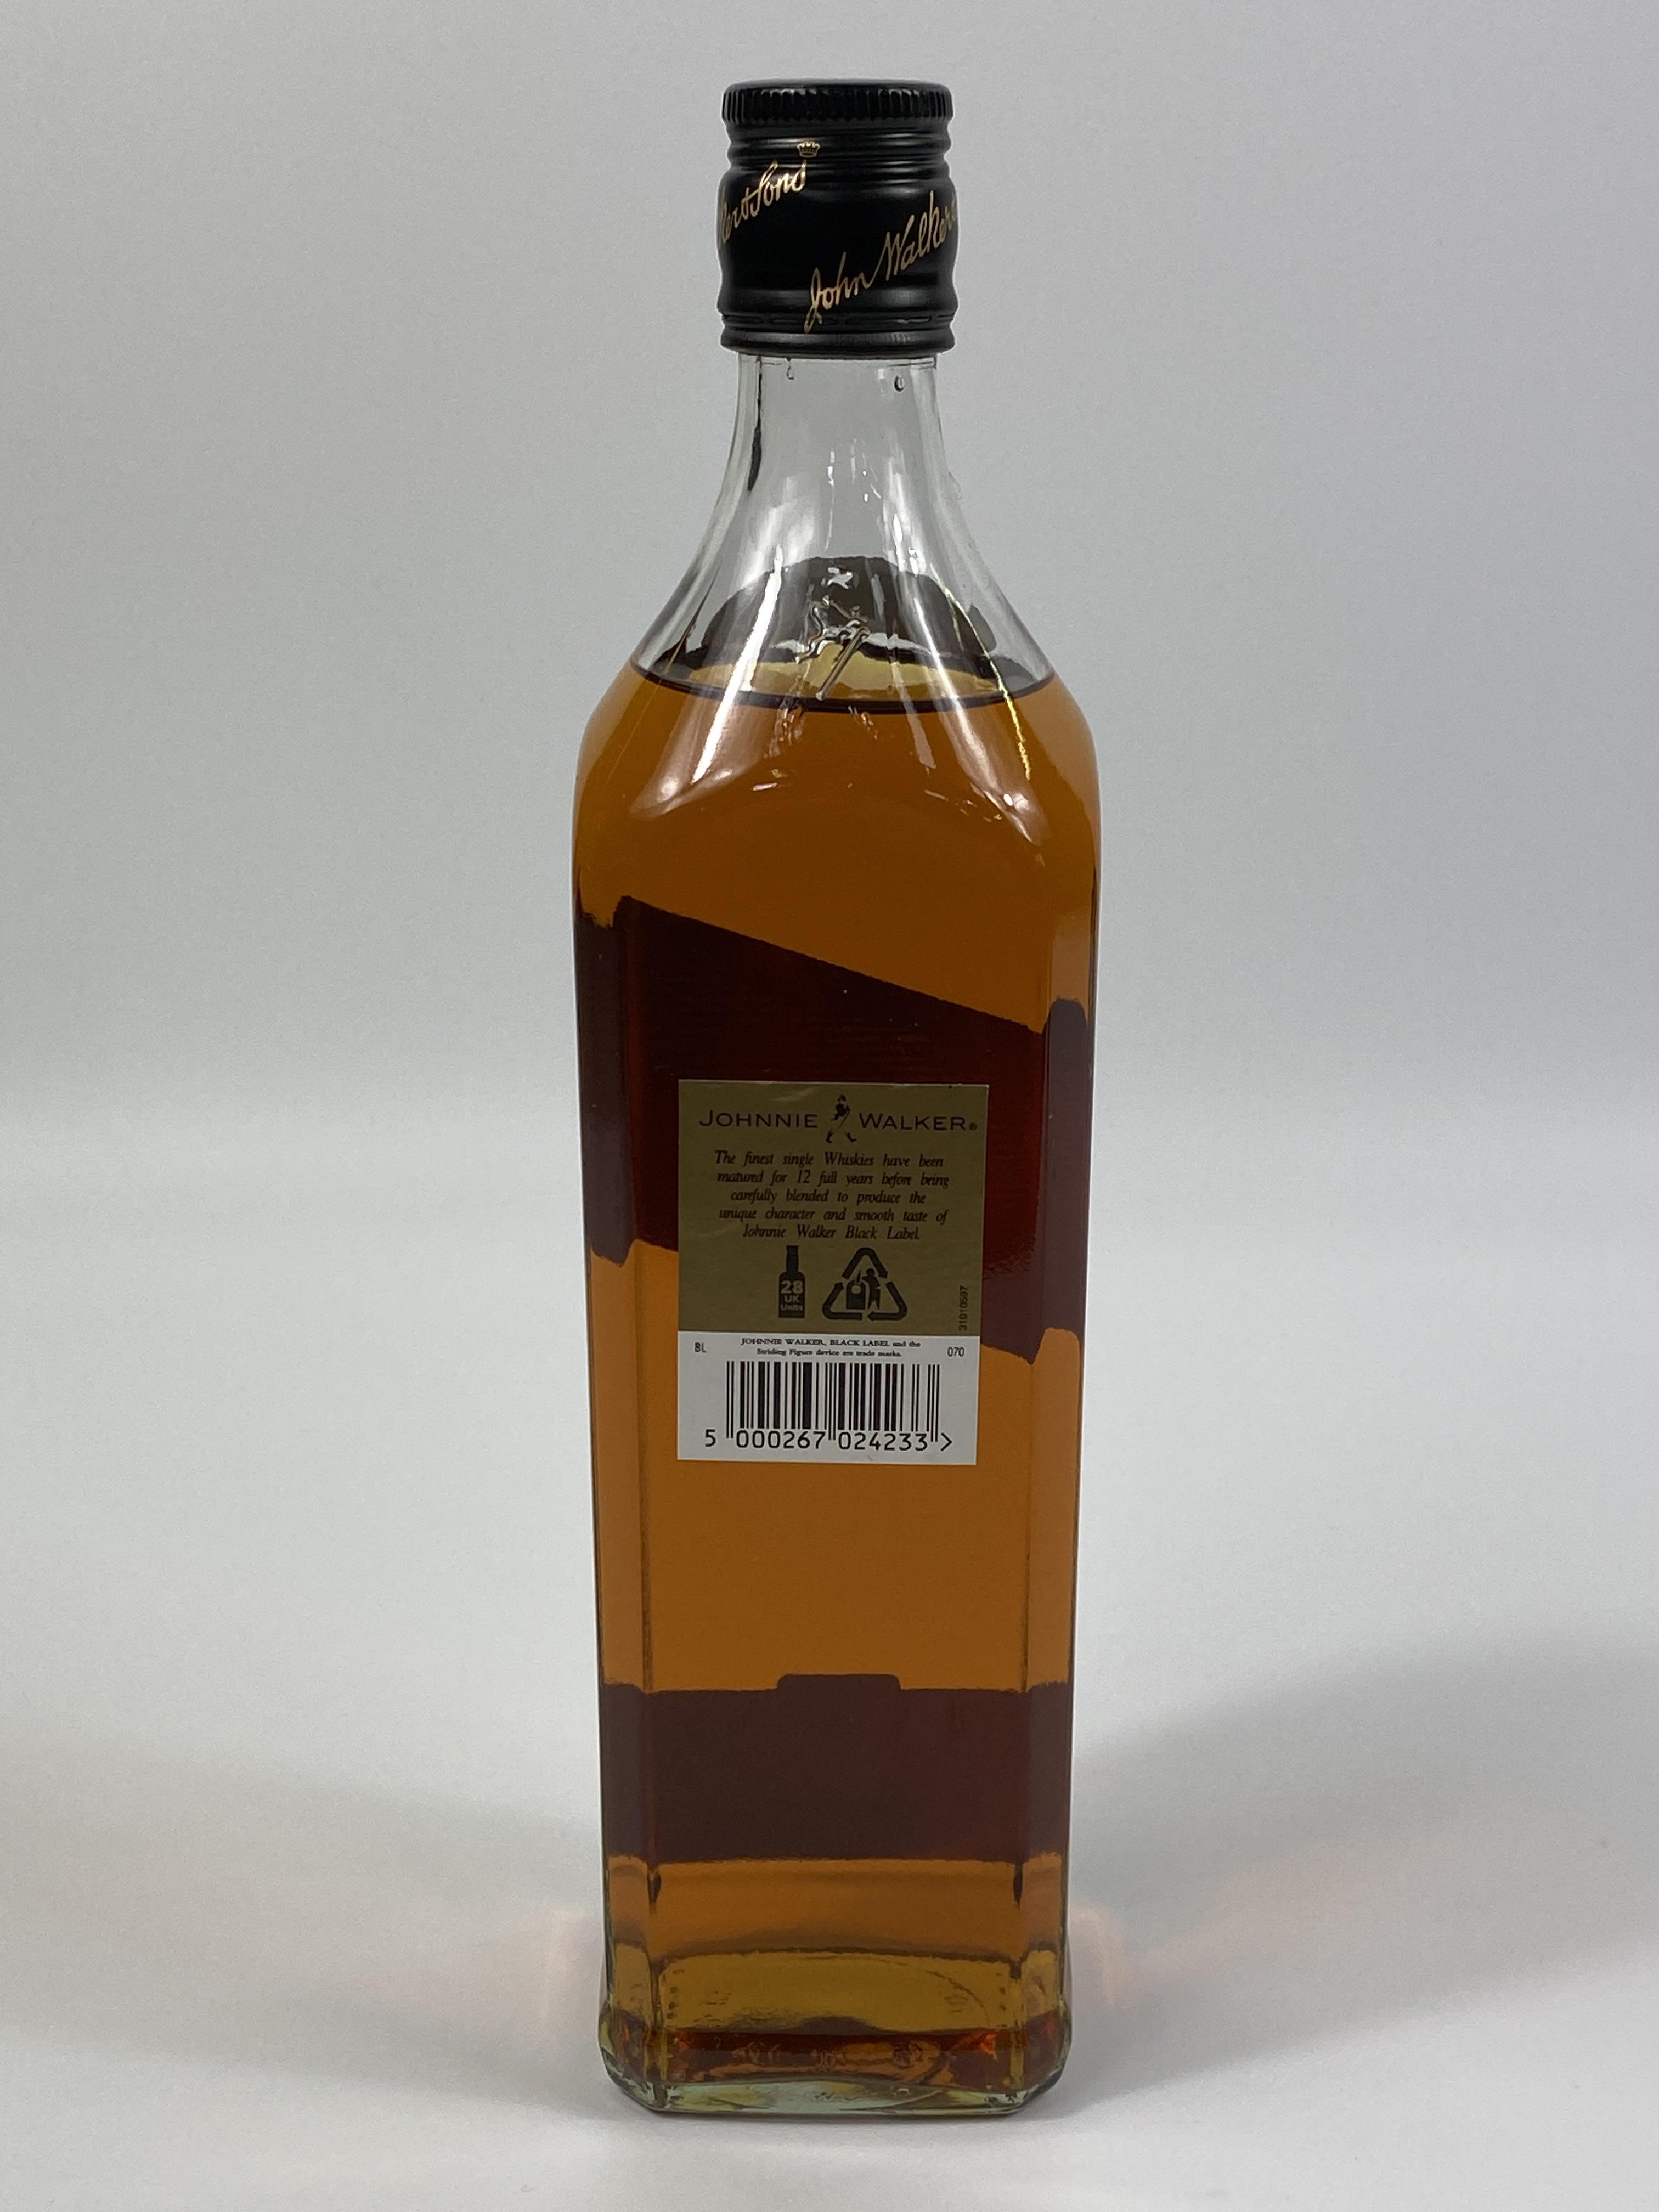 75cl bottle of Johnnie Walker Oldest Scotch whisky; bottle of Johnnie Walker Black Label - Image 3 of 5